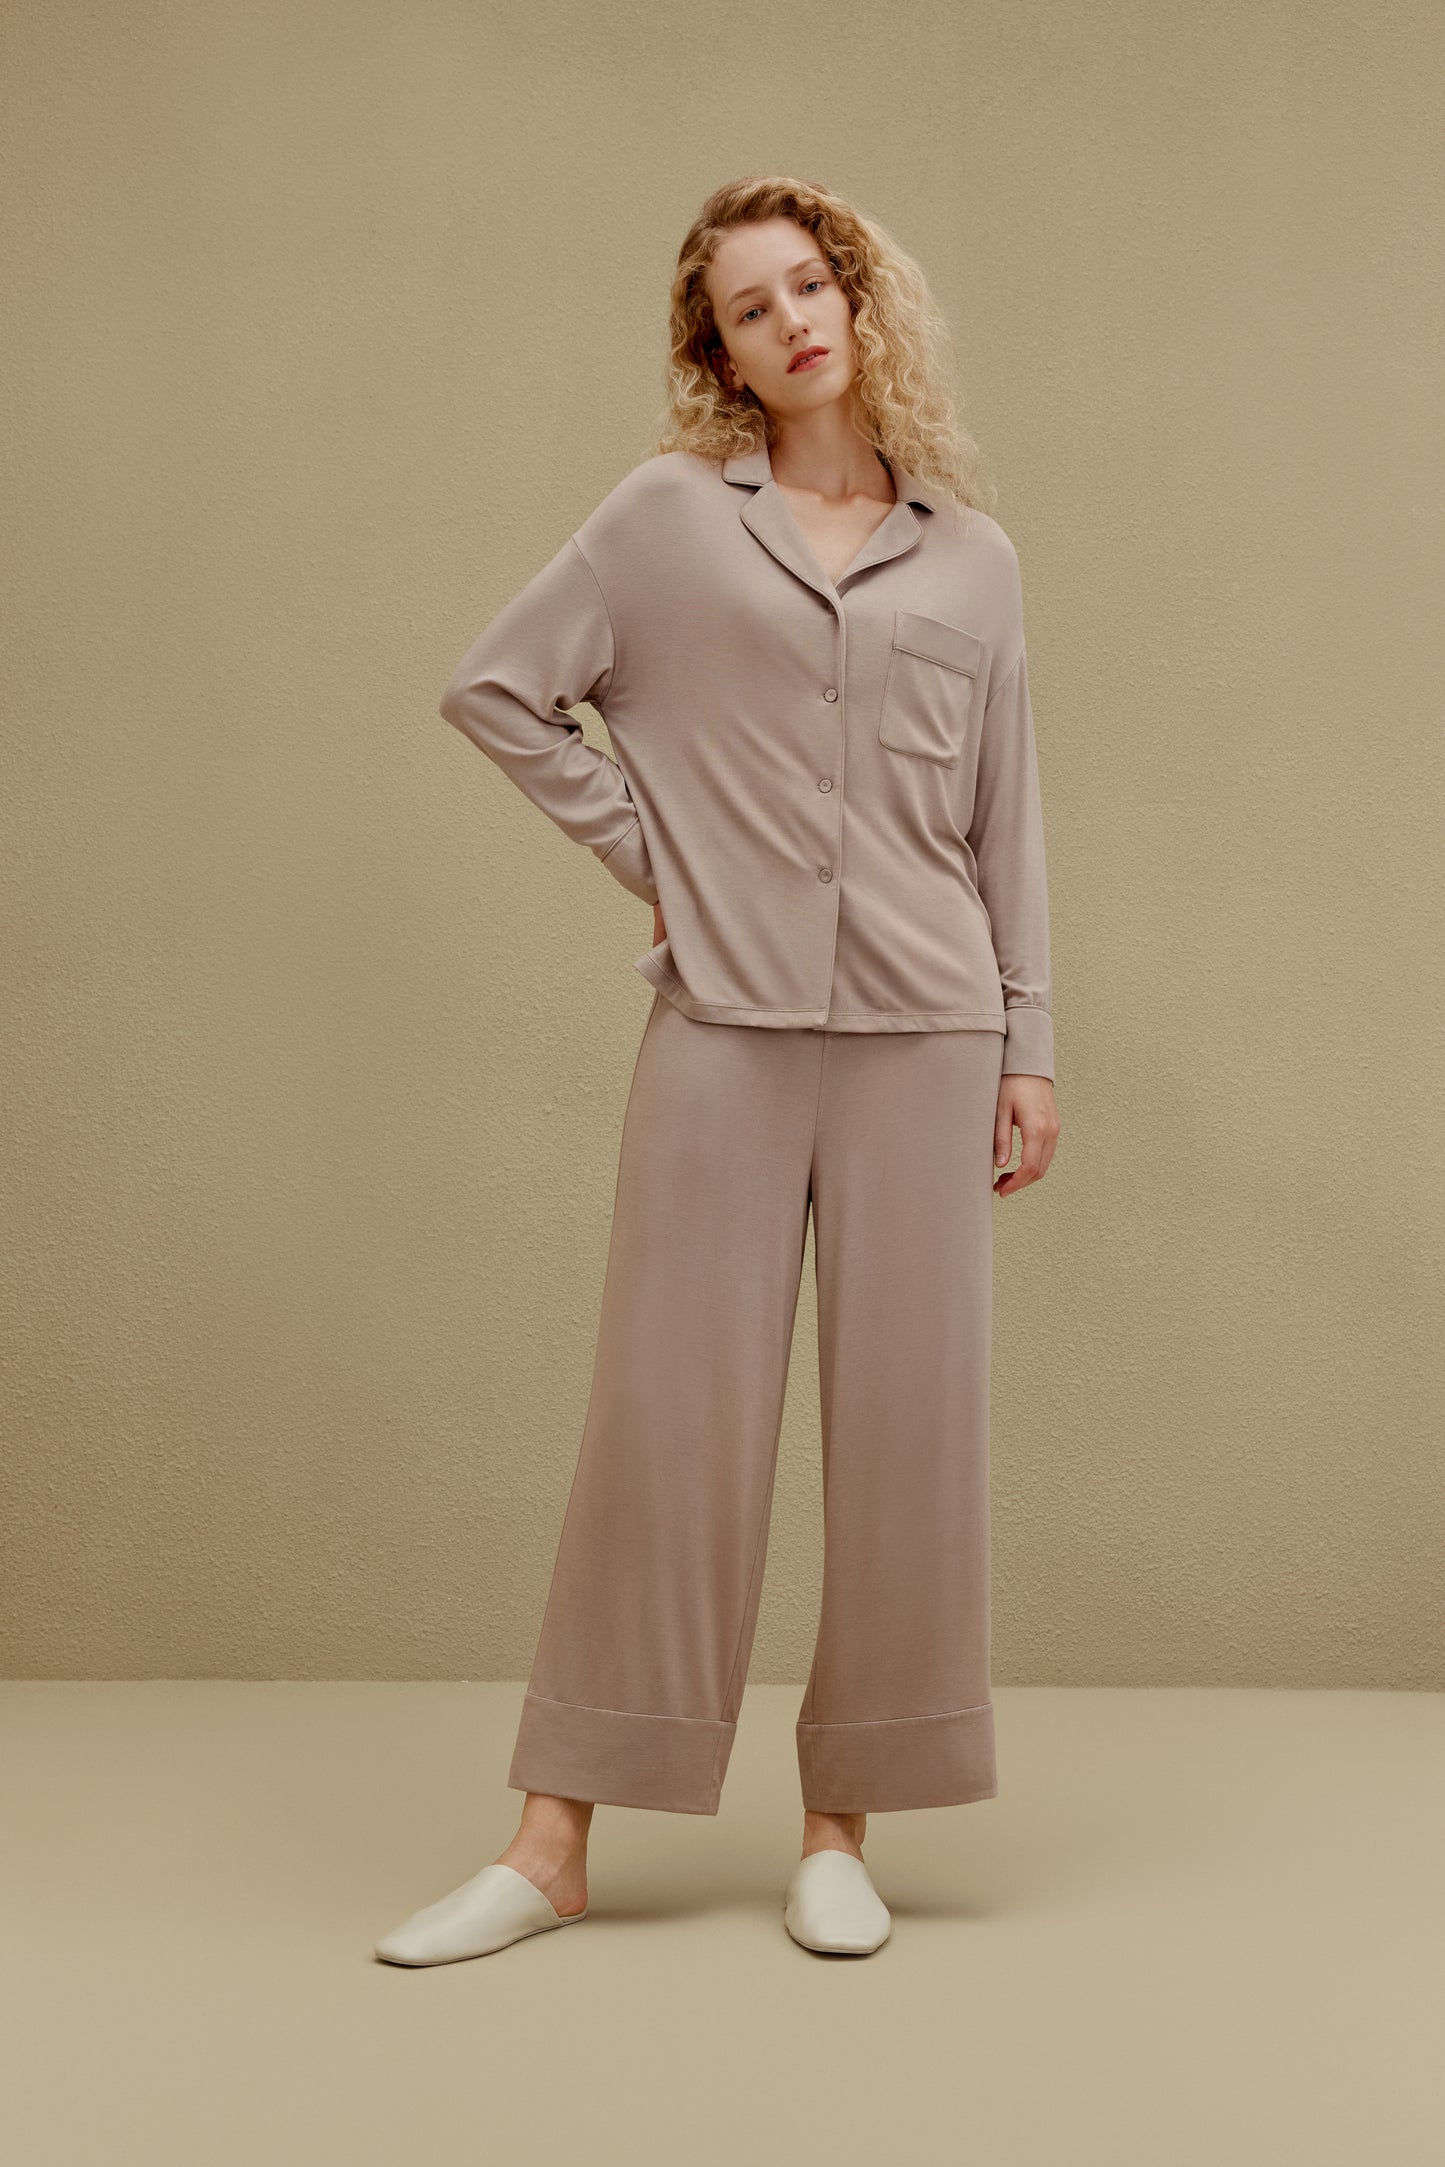 Woman wearing tan button up pajama shirt with pocket and matching pajama pants